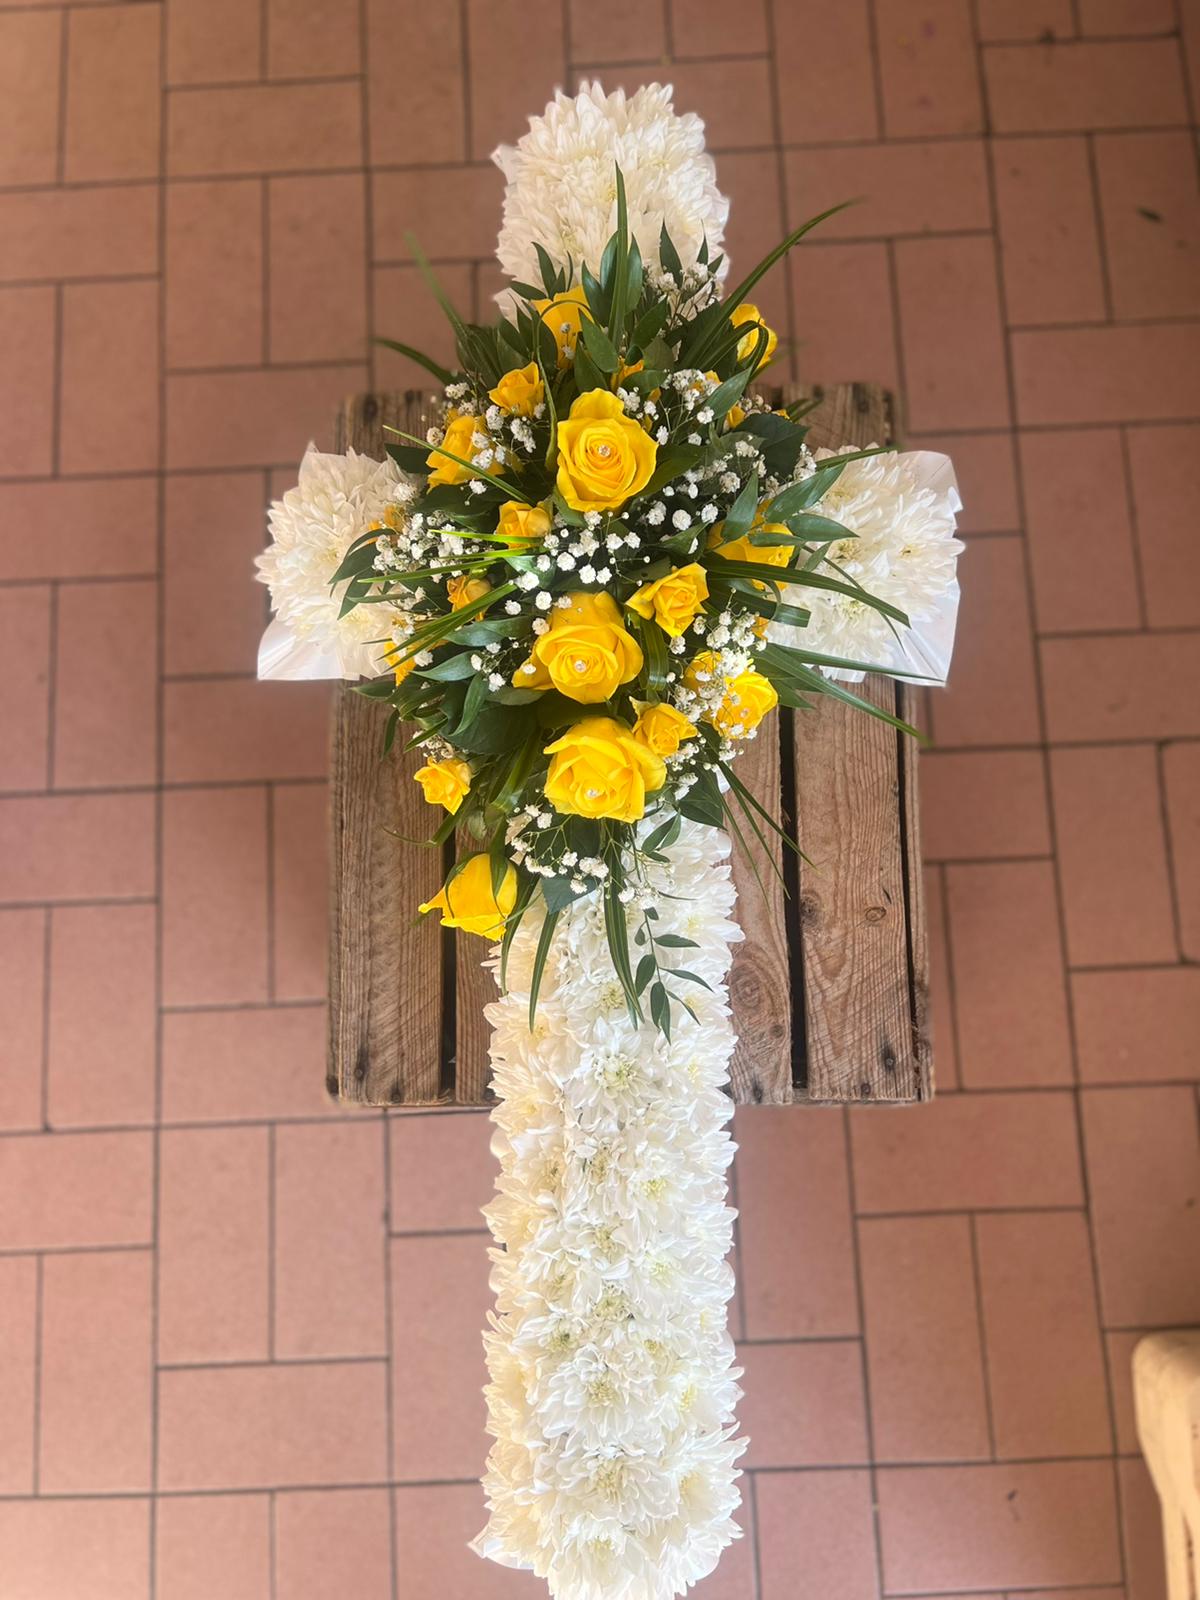 Funeral Cross Flowers